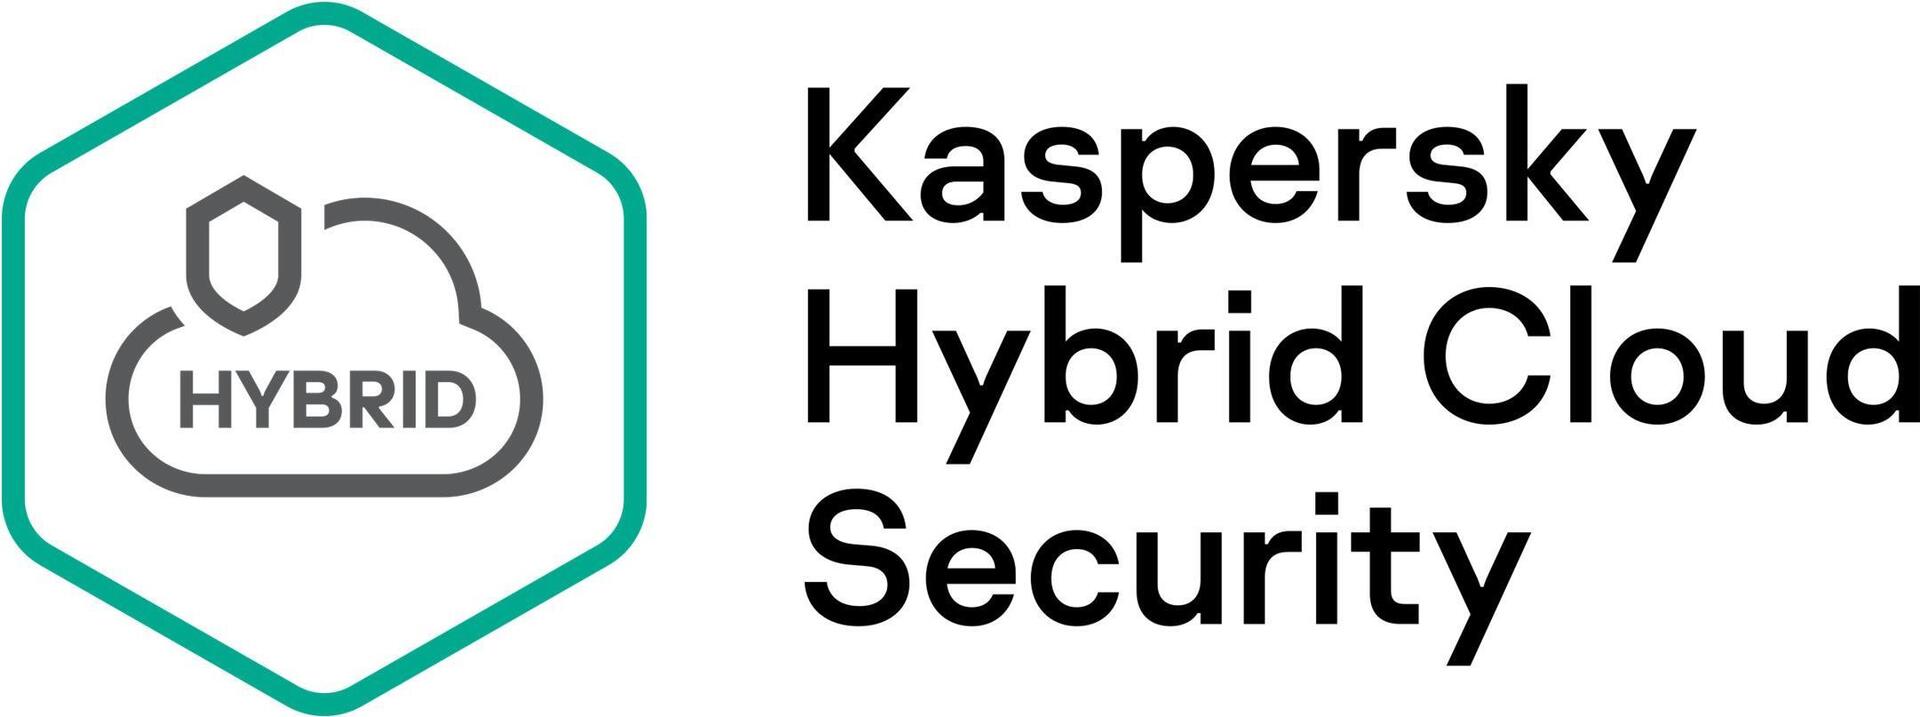 KASPERSKY Hybrid Cloud Security Enterprise CPU European Edition 3 - CPU 3 year Renewal Plus License (KL4553XACT9)